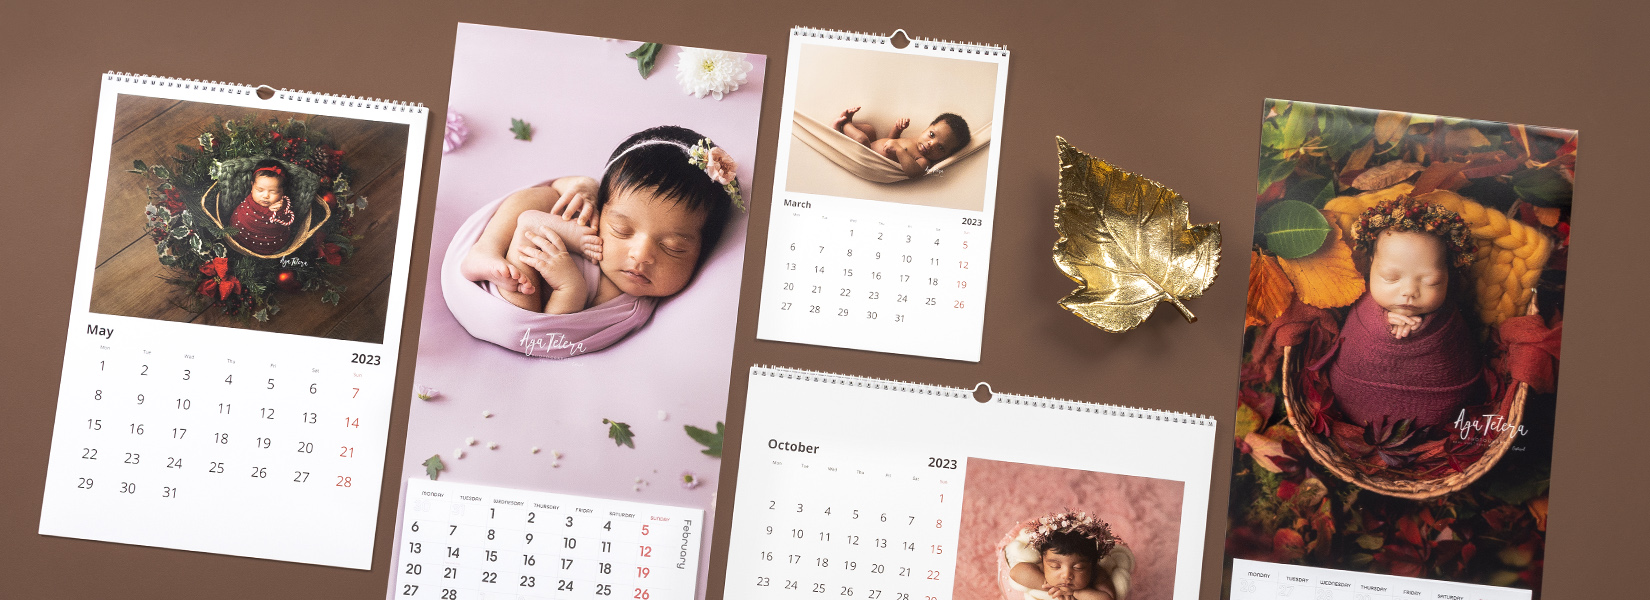 profesjonalne fotokalendarze dla fotografów